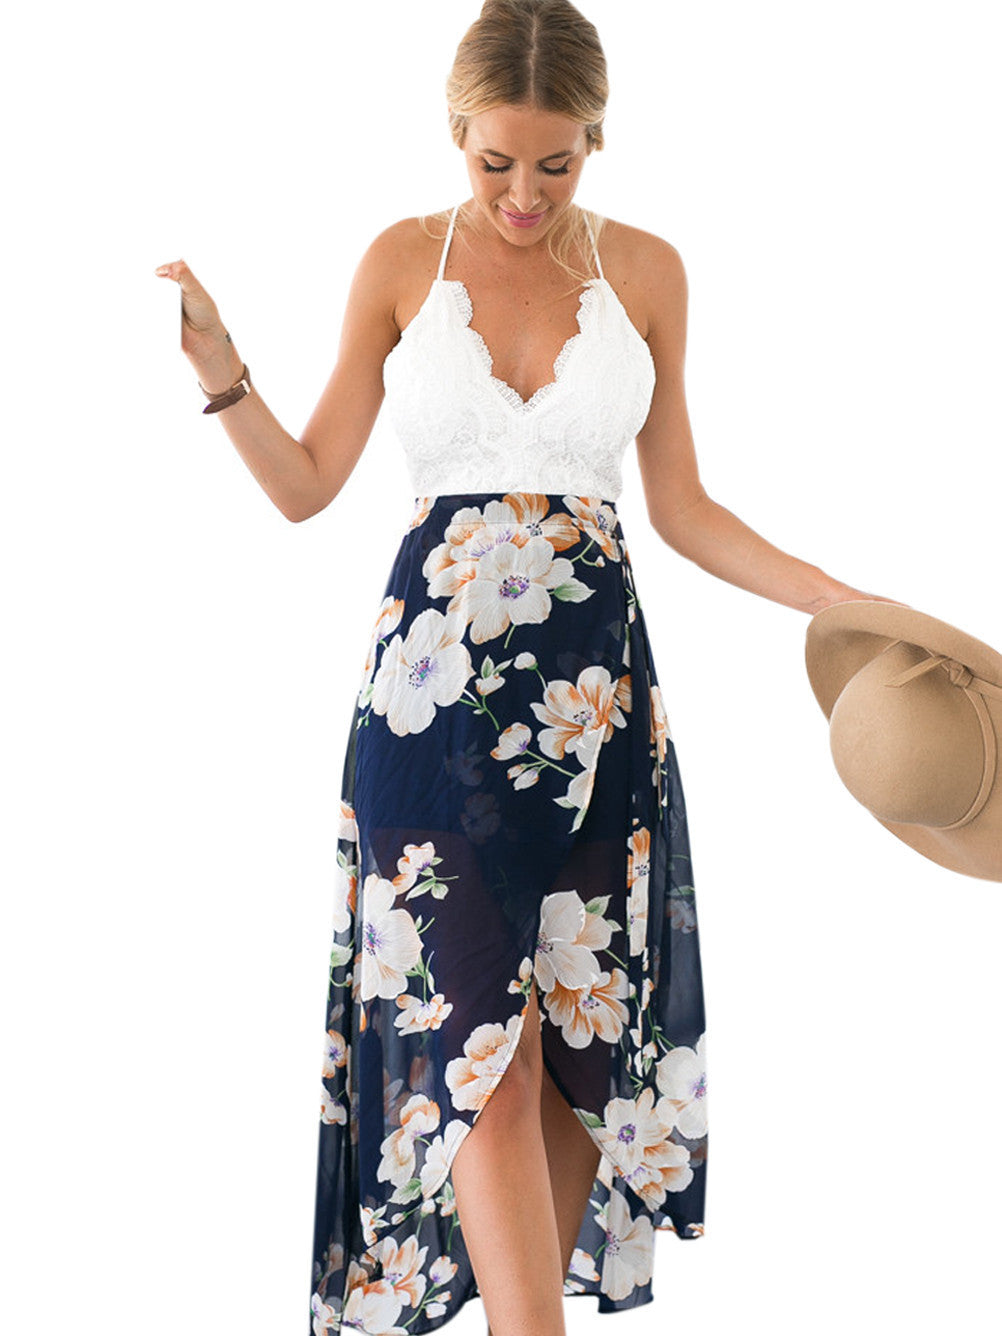 Online discount shop Australia - Backless Floral Print Chiffon Dress Patchwork Lace V Neck Open Back High Low Beach Summer Girls Casual Long Maxi High low Dress